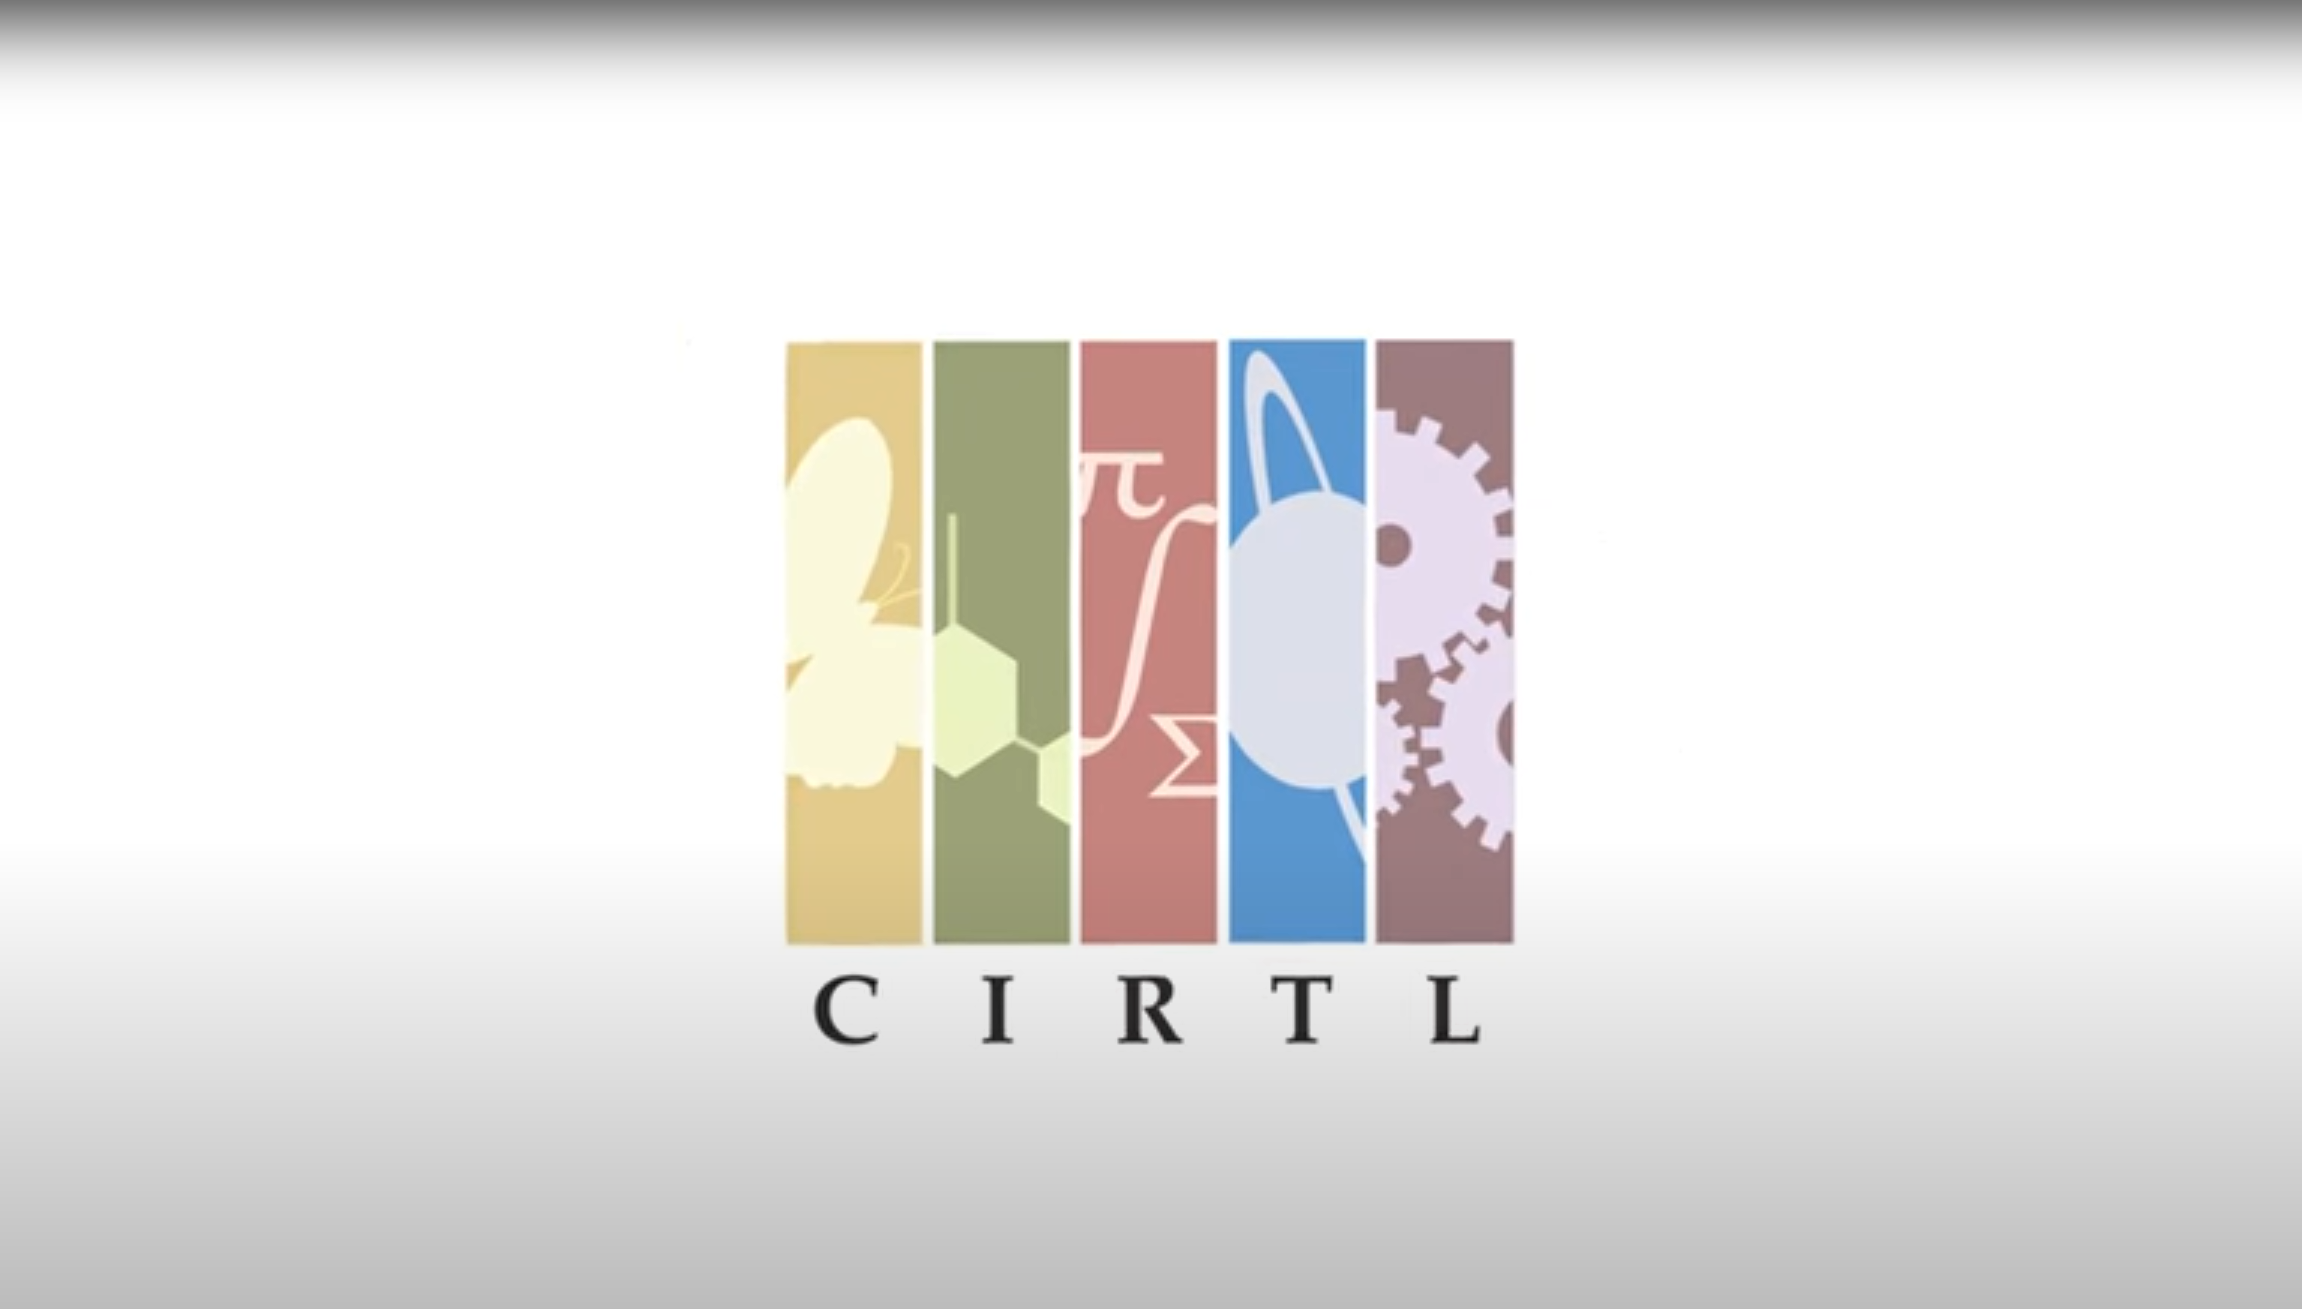 CIRTL logo